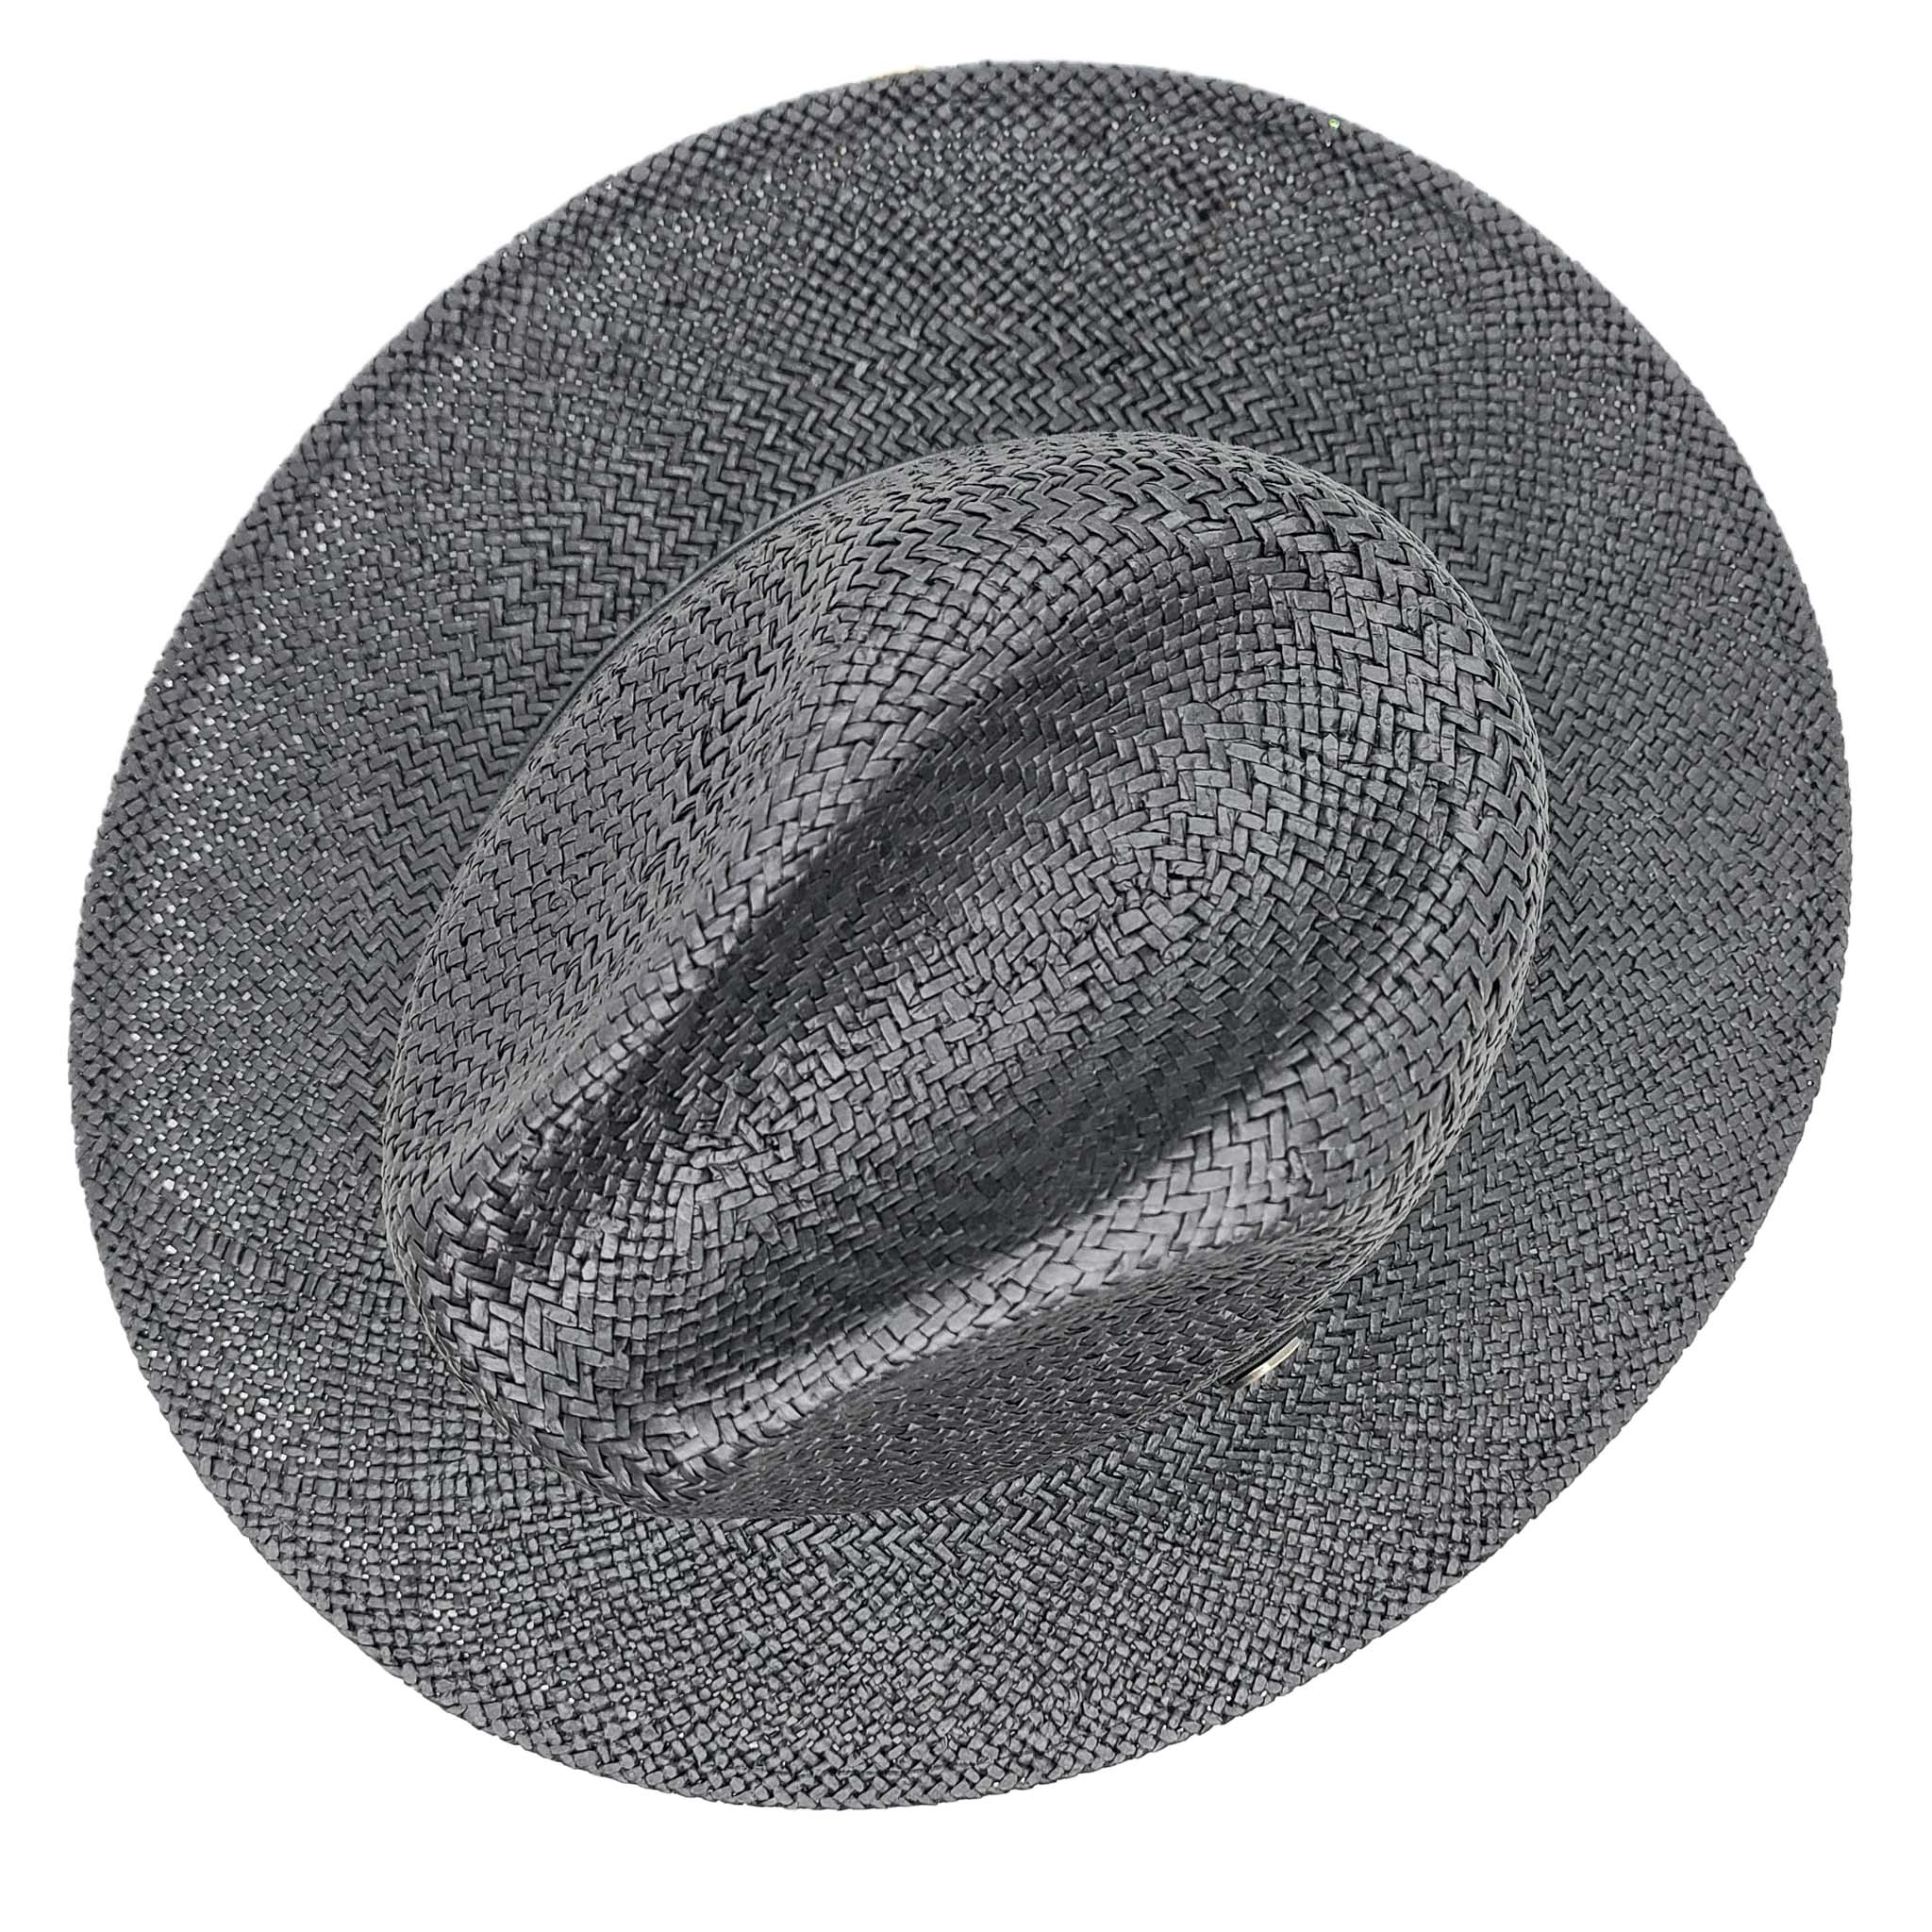 Black Fedora Style Straw Hat